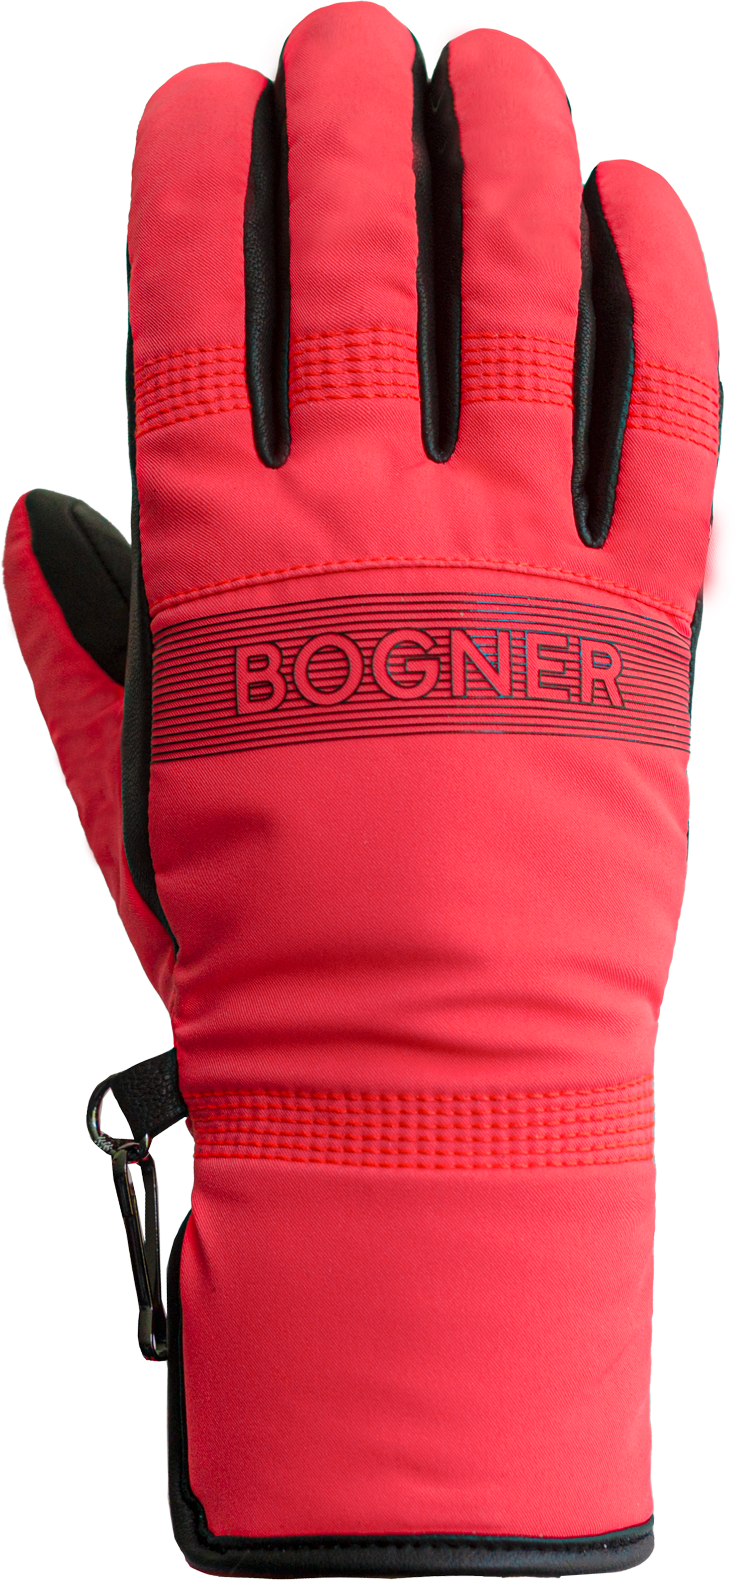 Bogner Gloves_61 97 232_729_v